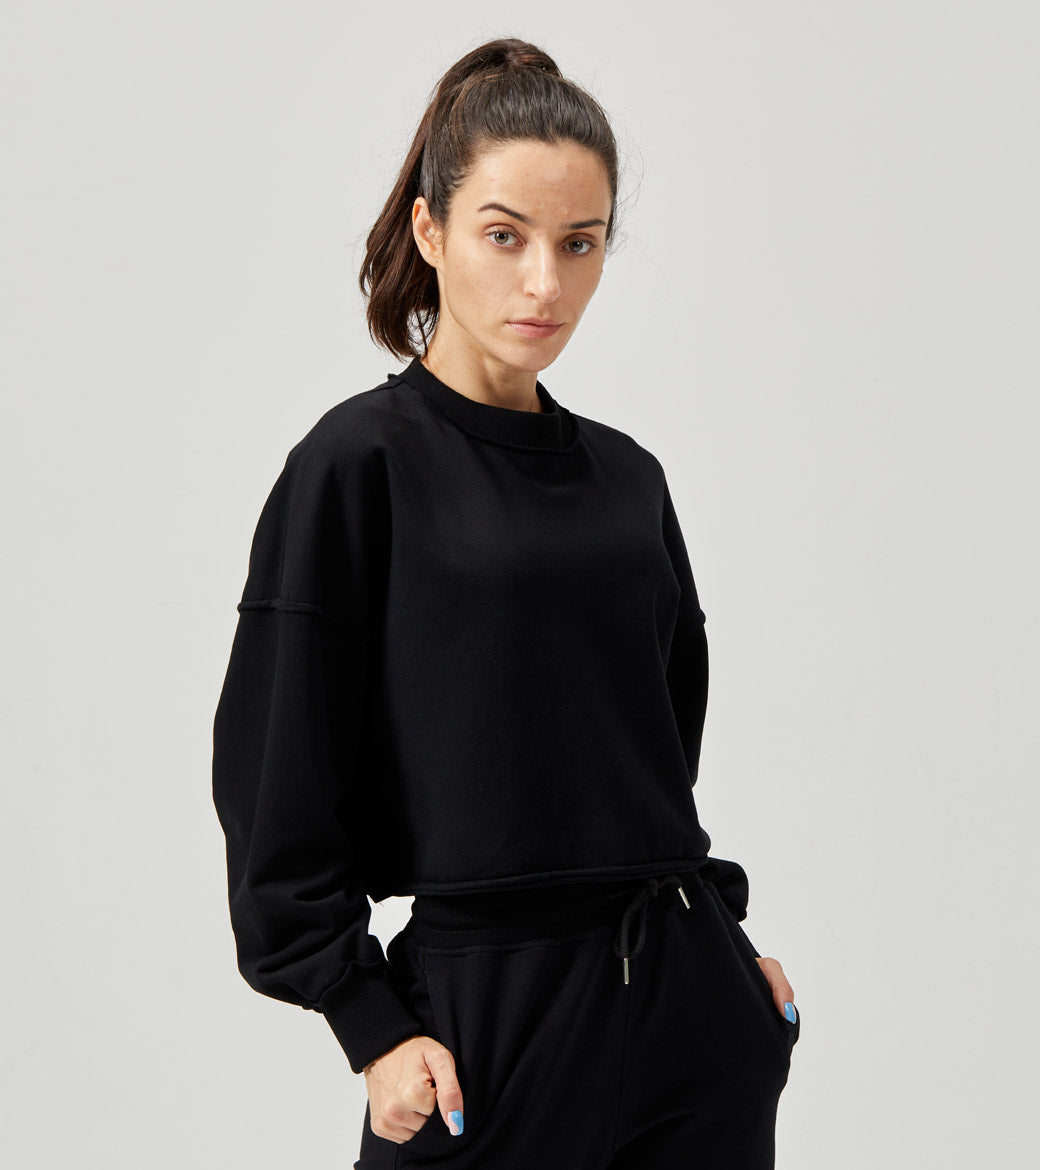 LOVESOFT Women's  Black Autumn Fashion All-match Long-sleeved  Sweatshirt